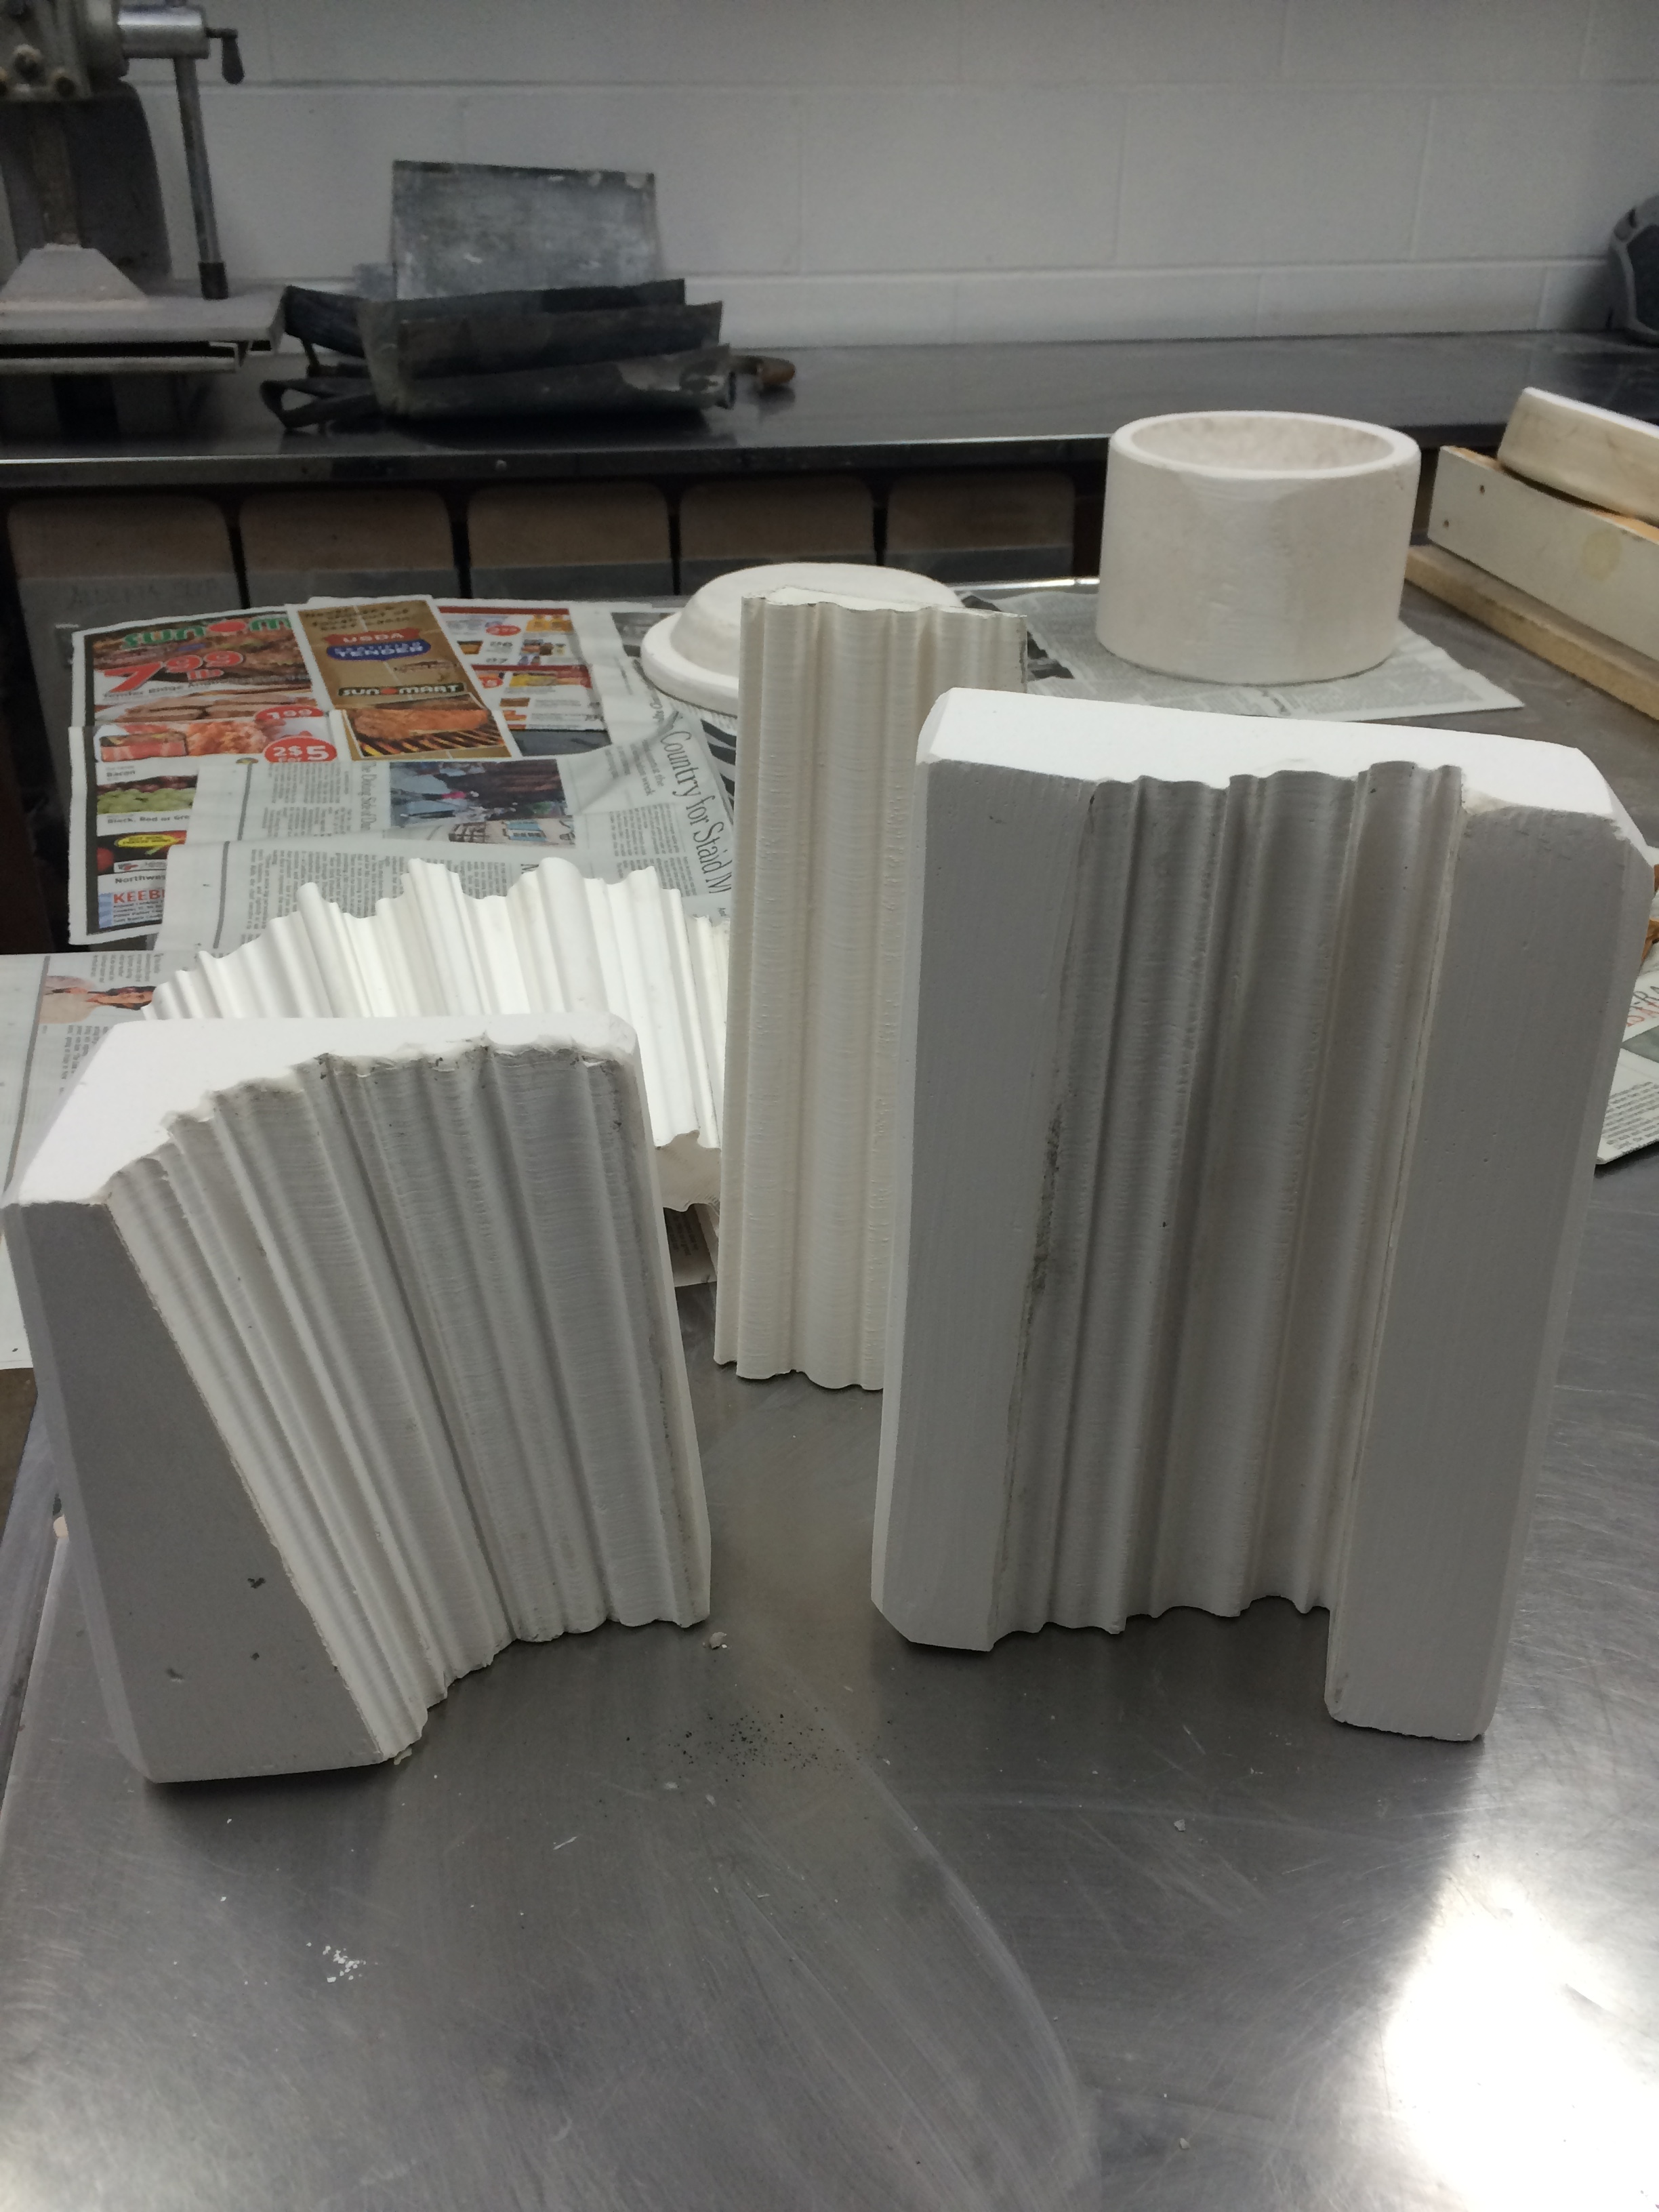 Plaster press-molds taken from 3D prints